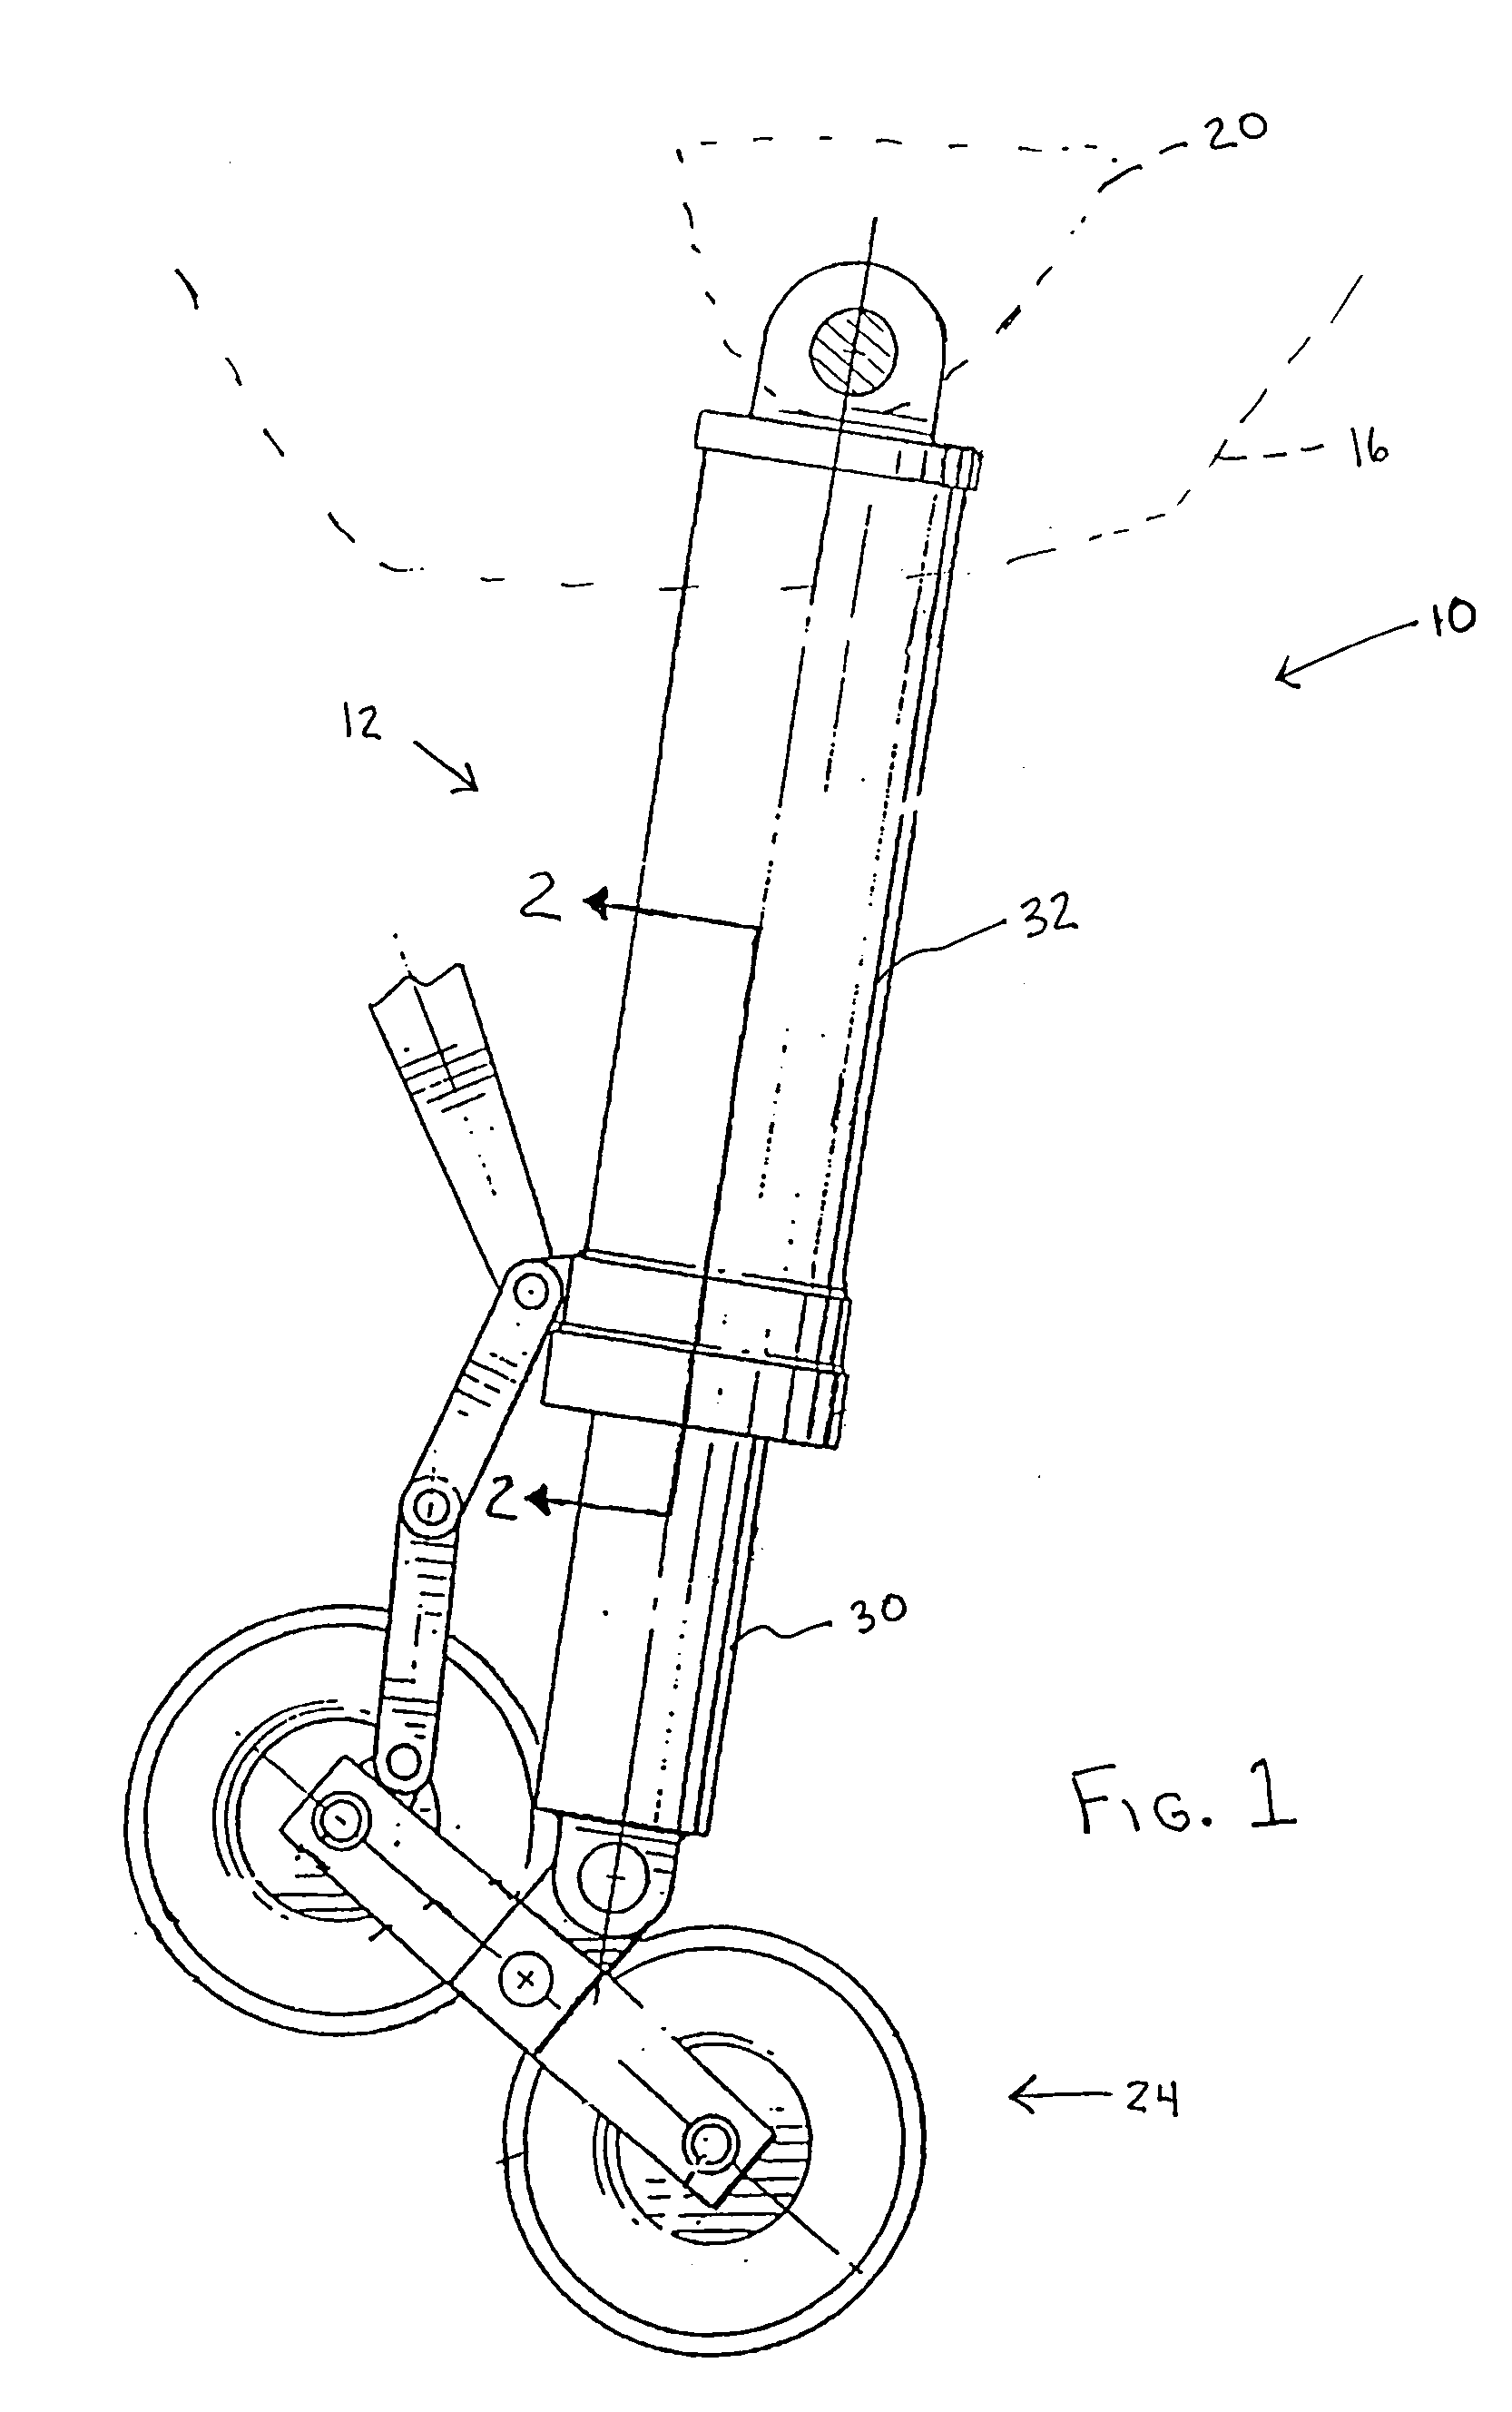 Aircraft shock strut having improved cylinder and bearings